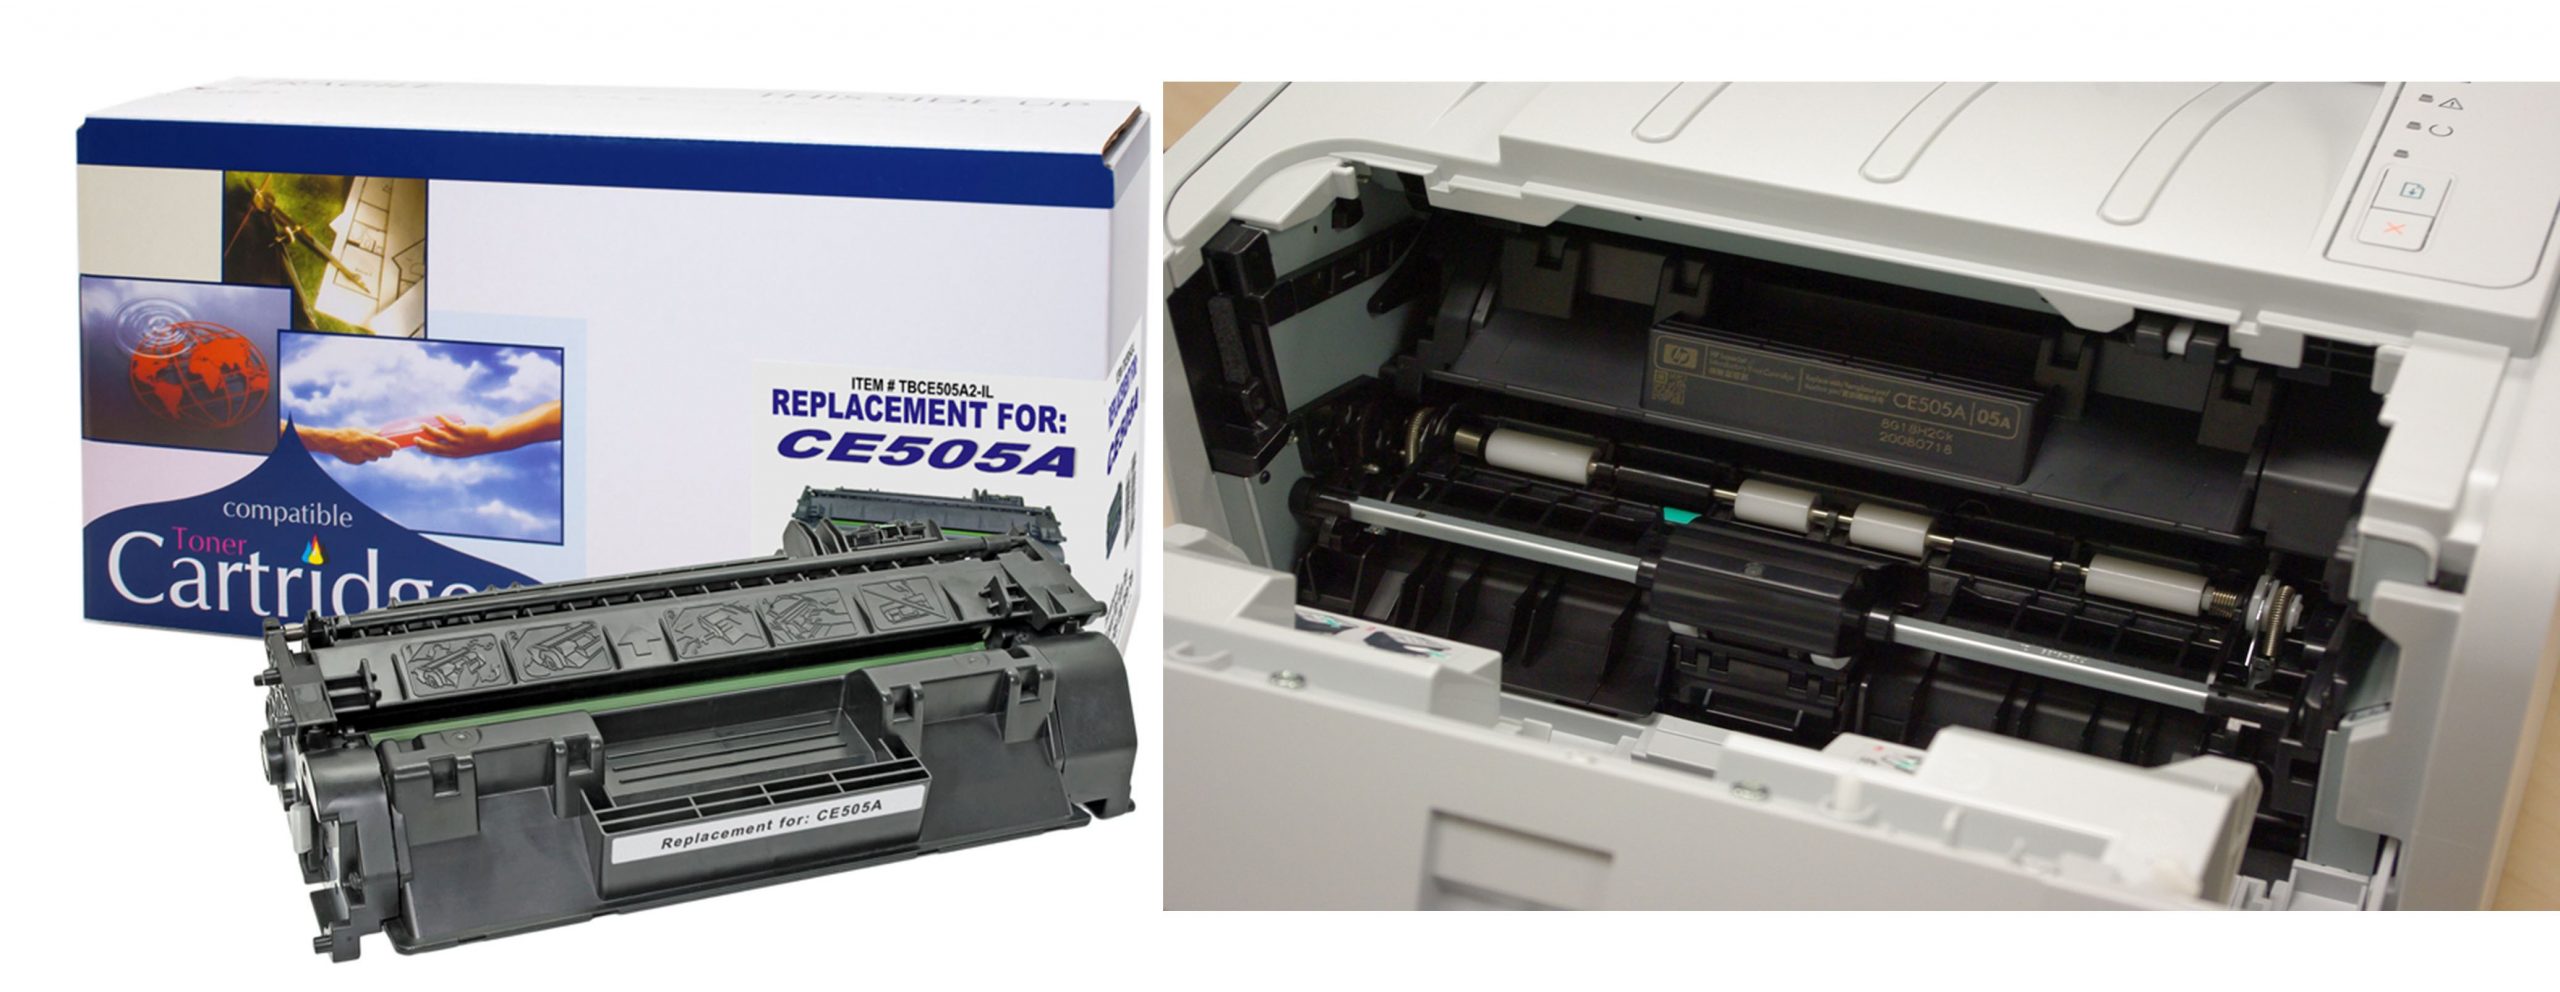 HP-P2035-Cartridge-printer